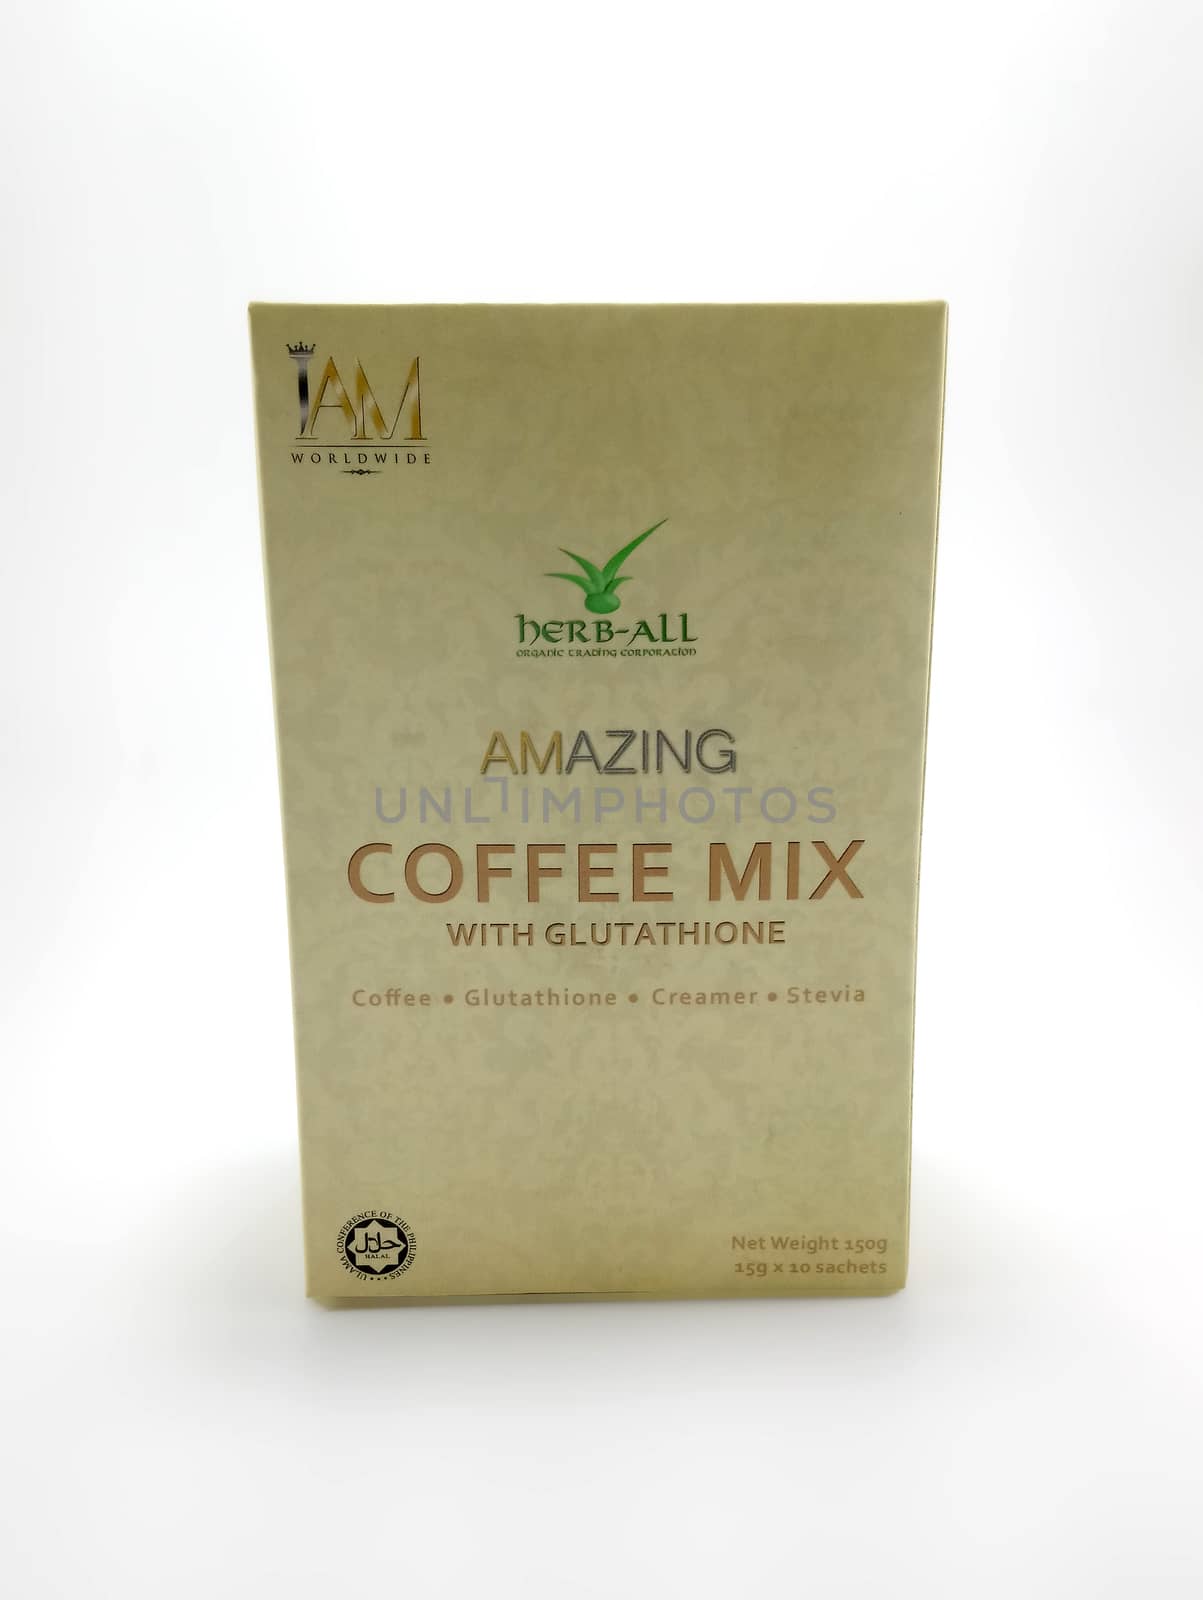 MANILA, PH - JUNE 23 - Iam amazing coffee mix with glutathione on June 23, 2020 in Manila, Philippines.